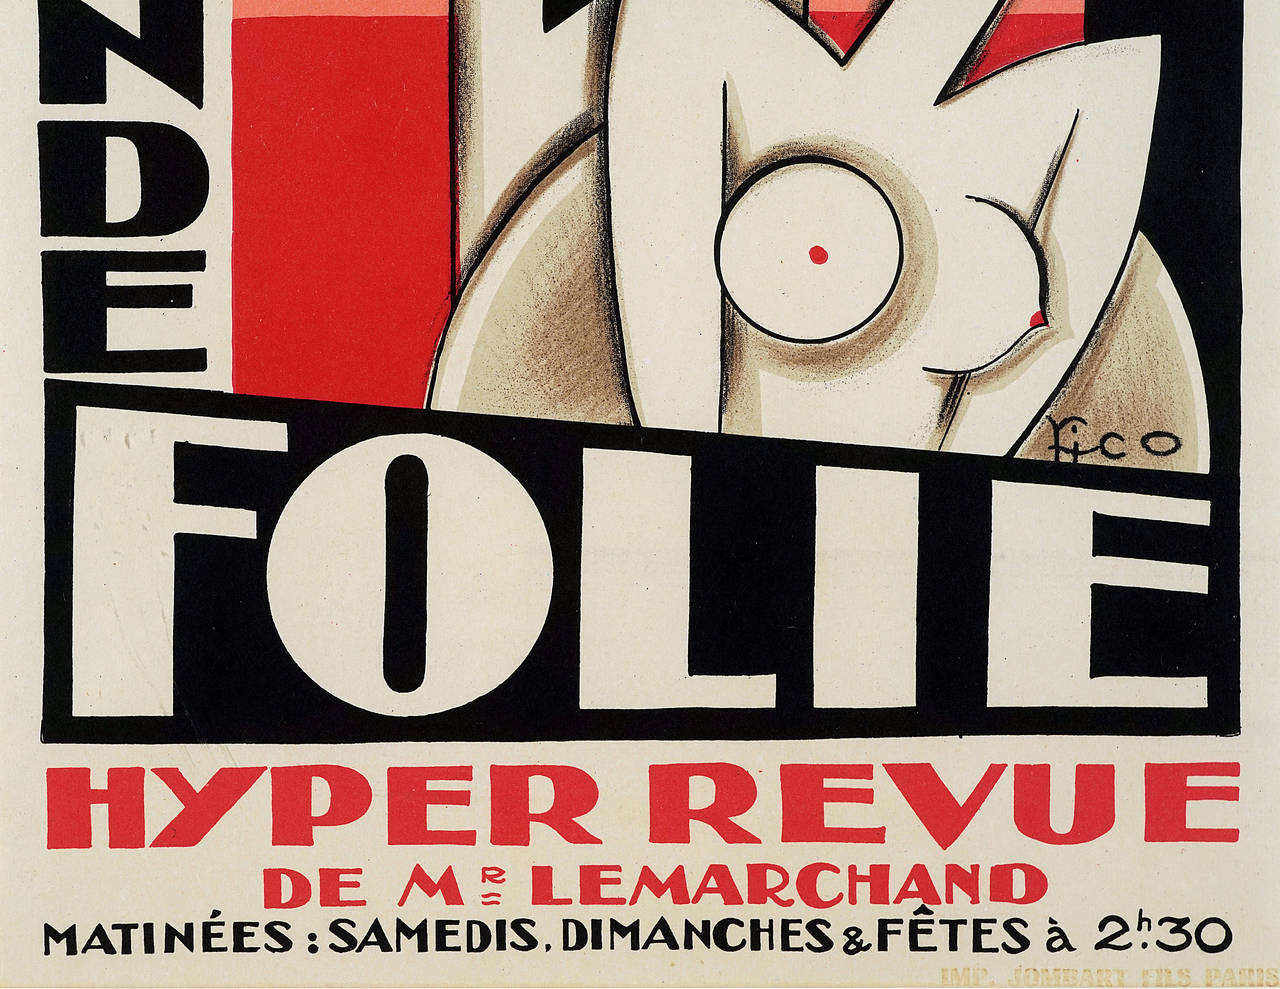 La Grande Folie Folies Bergere Hyper Revue Poster - Print by Maurice (Pico) Picauld